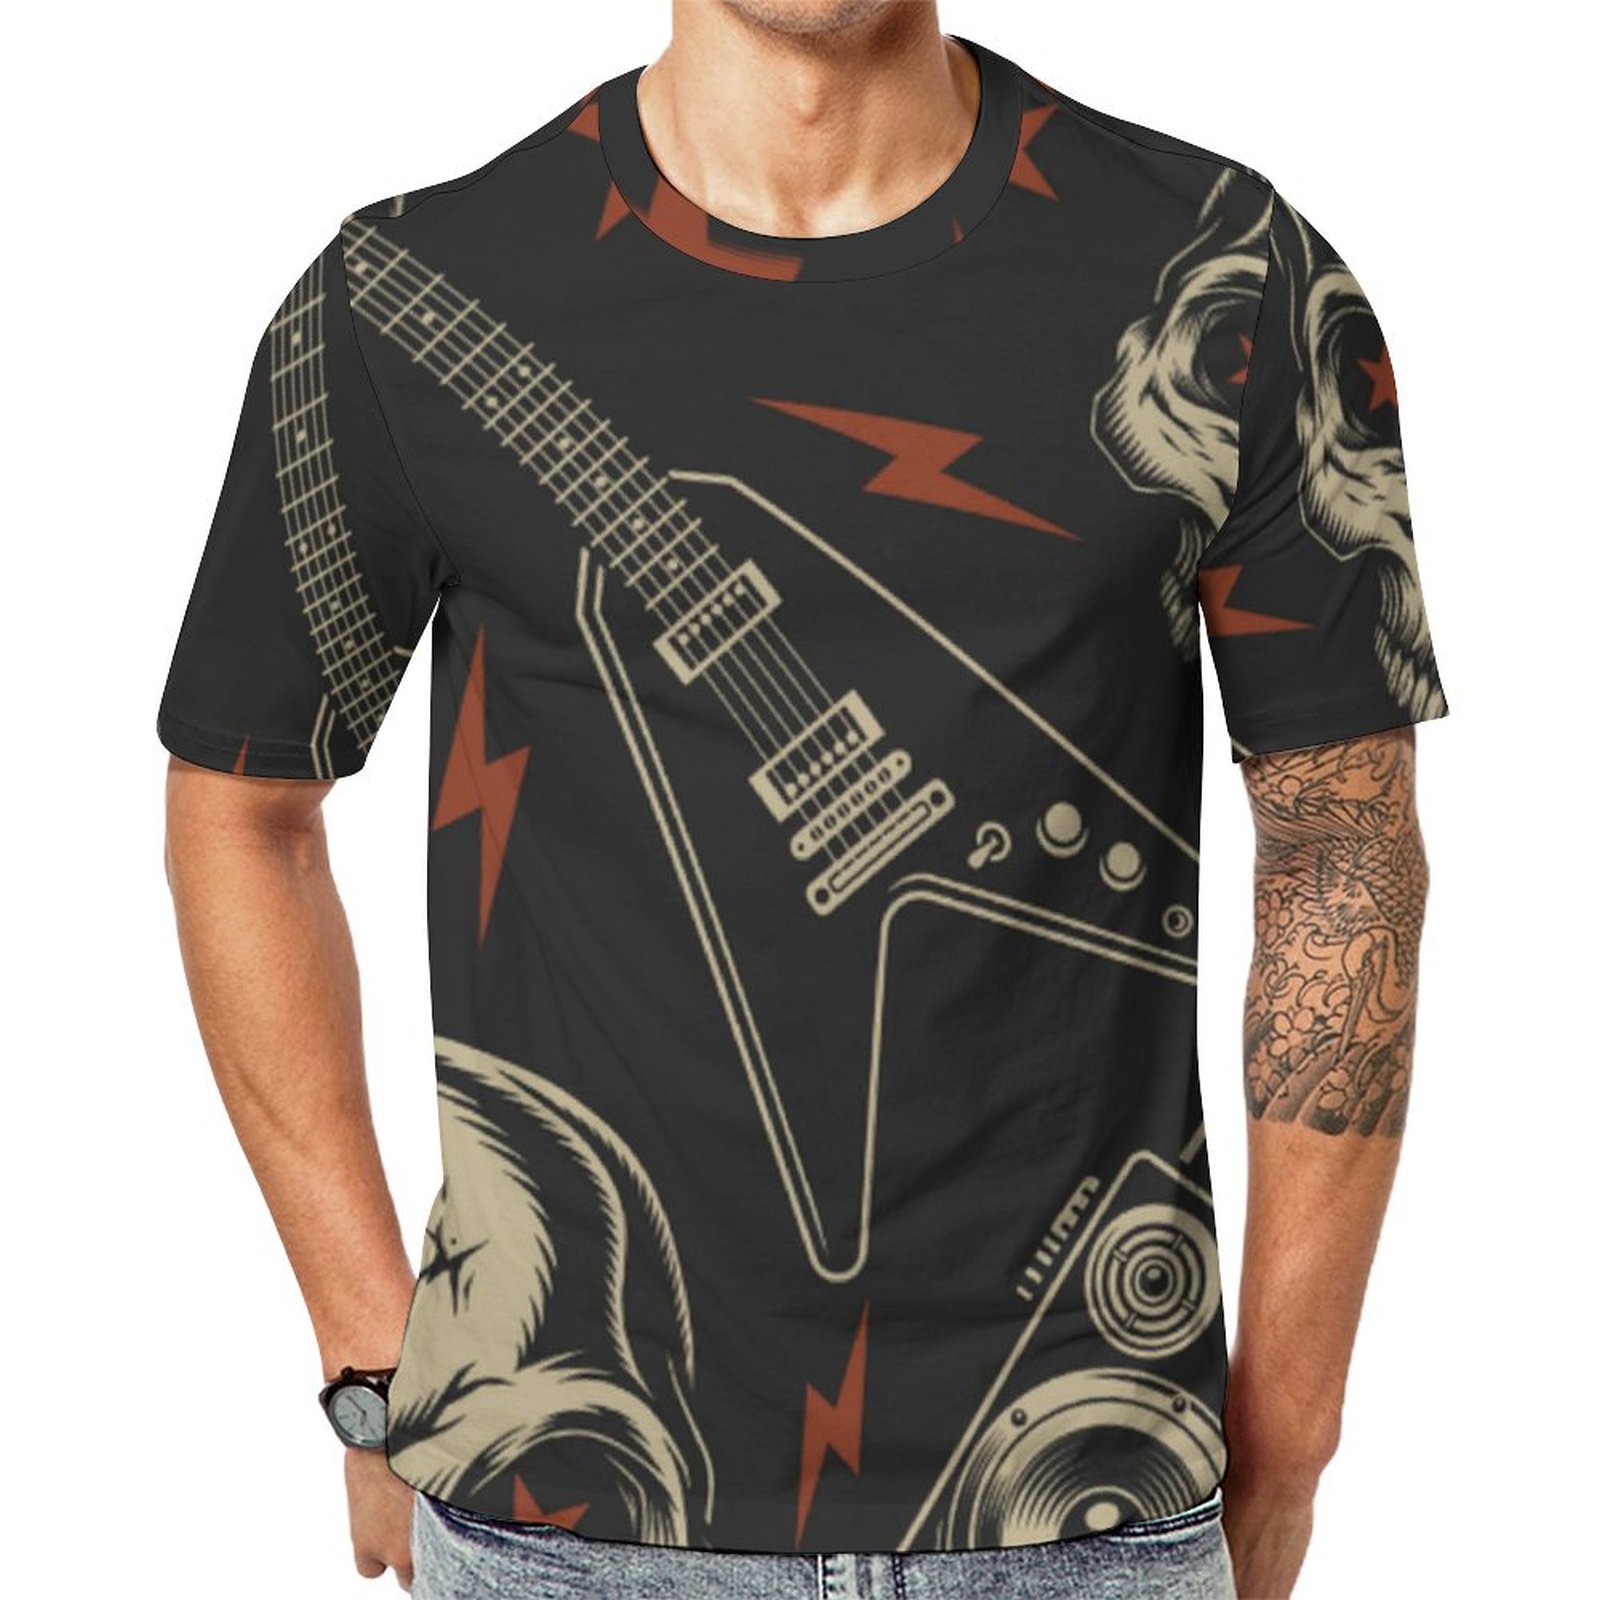 Grunge Music Skull Crossbones Short Sleeve Print Unisex Tshirt Summer Casual Tees for Men and Women Coolcoshirts